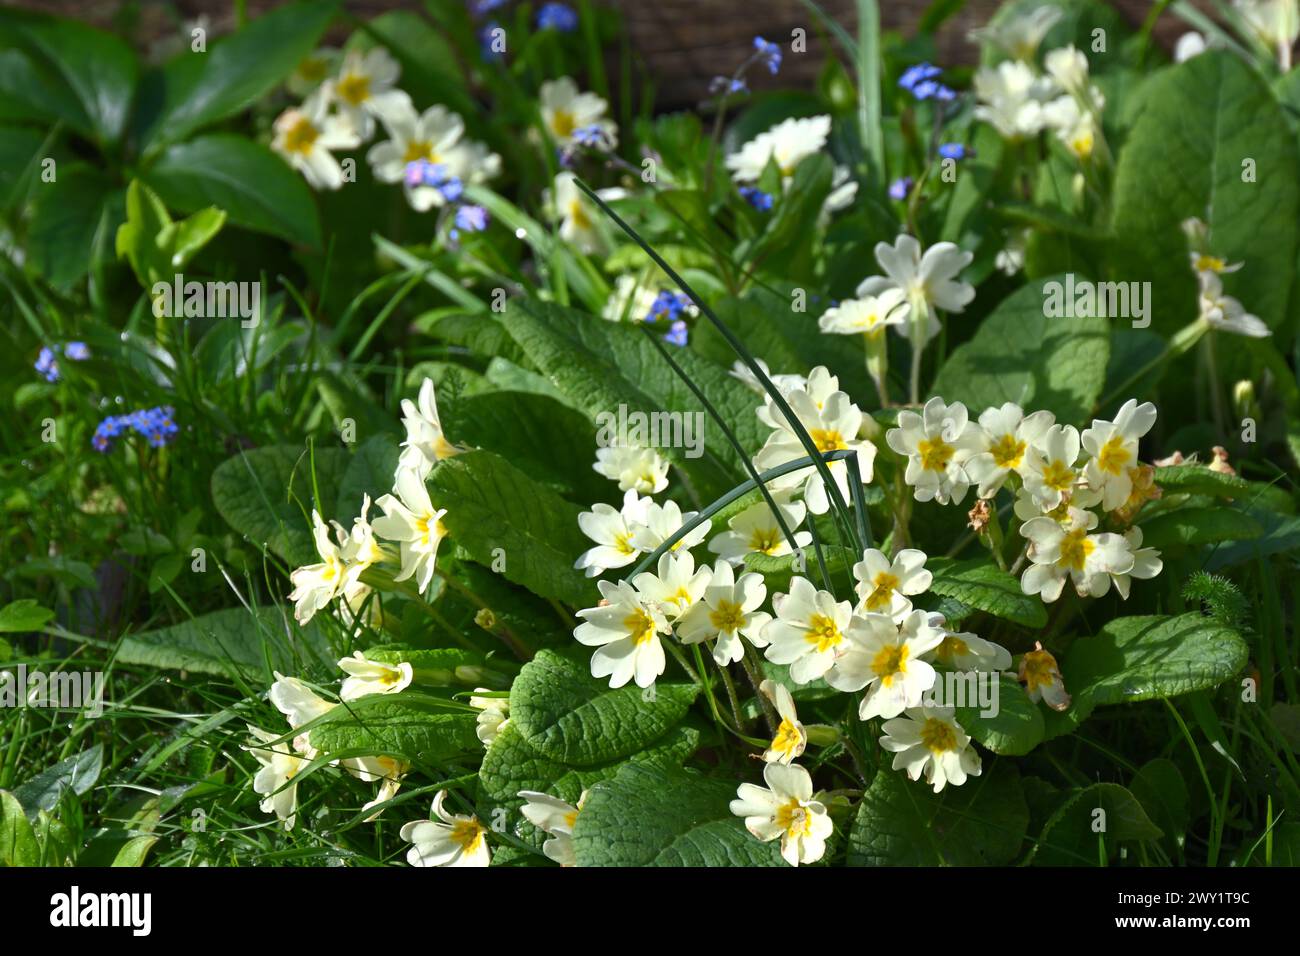 Wild primroses, Primula Vulgaris, and forget-me-not Myosotis sylvatica naturalised in grass in UK garden March Stock Photo